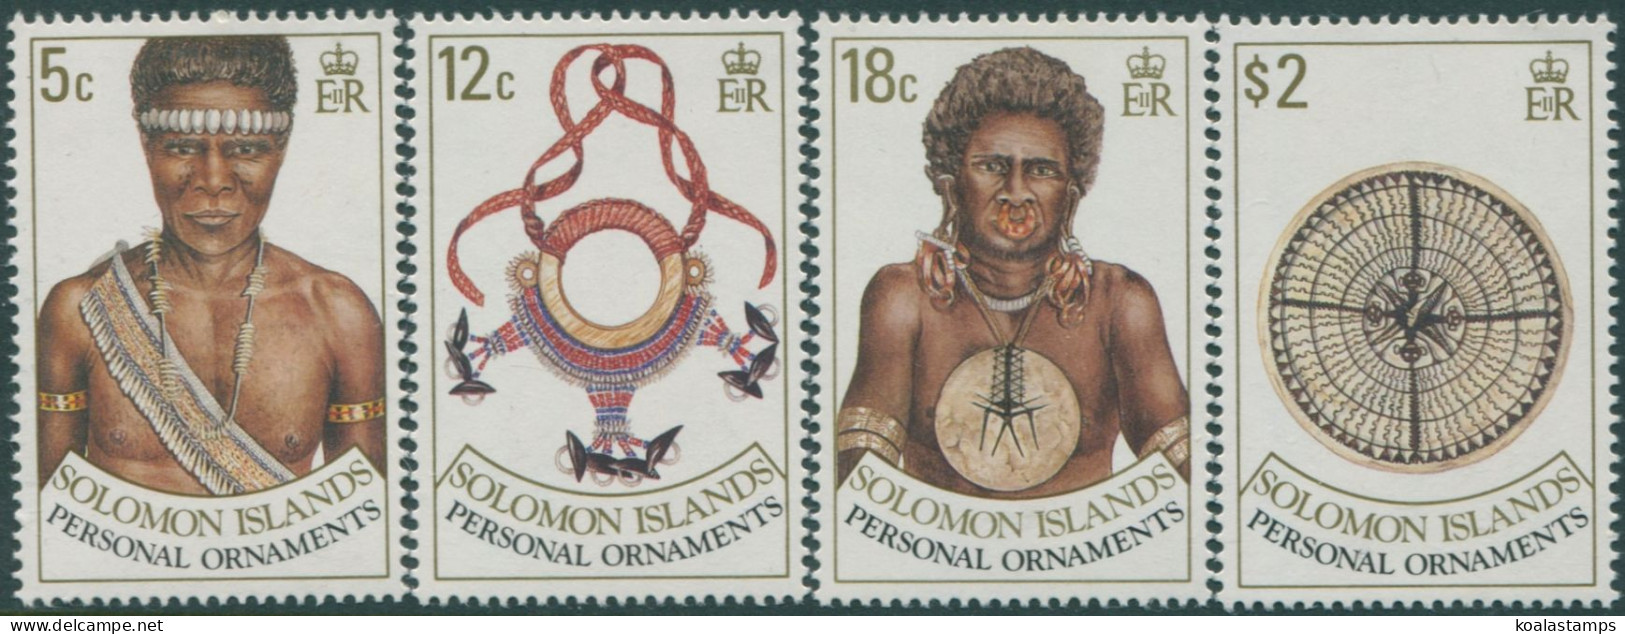 Solomon Islands 1990 SG666-669 Personal Ornaments Set MNH - Isole Salomone (1978-...)